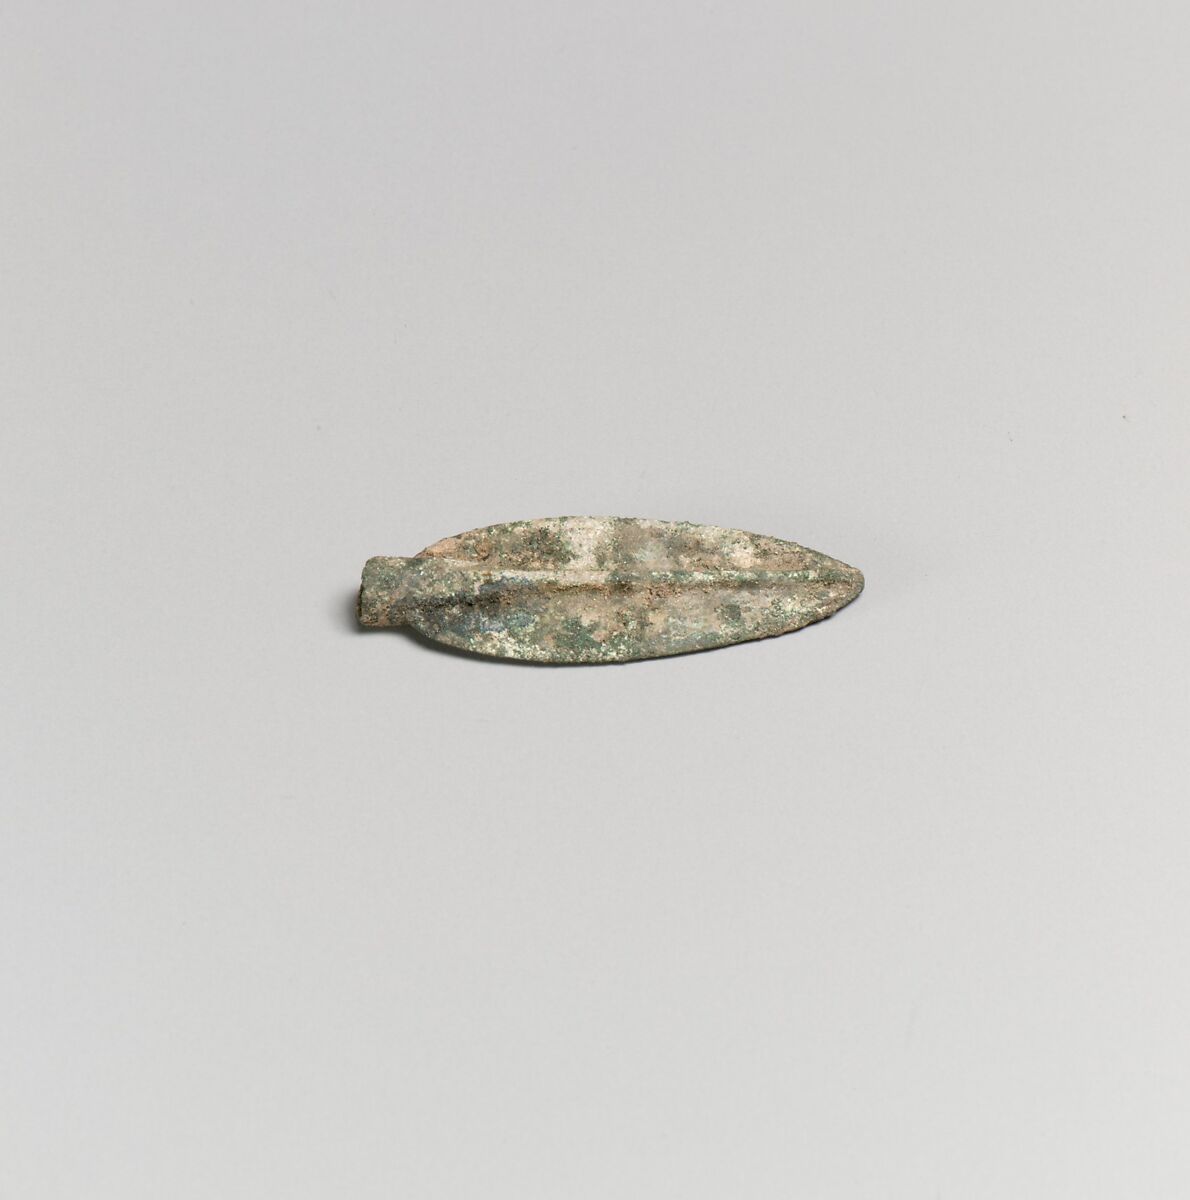 Bronze arrowhead, Bronze, Greek or Achaemenid 